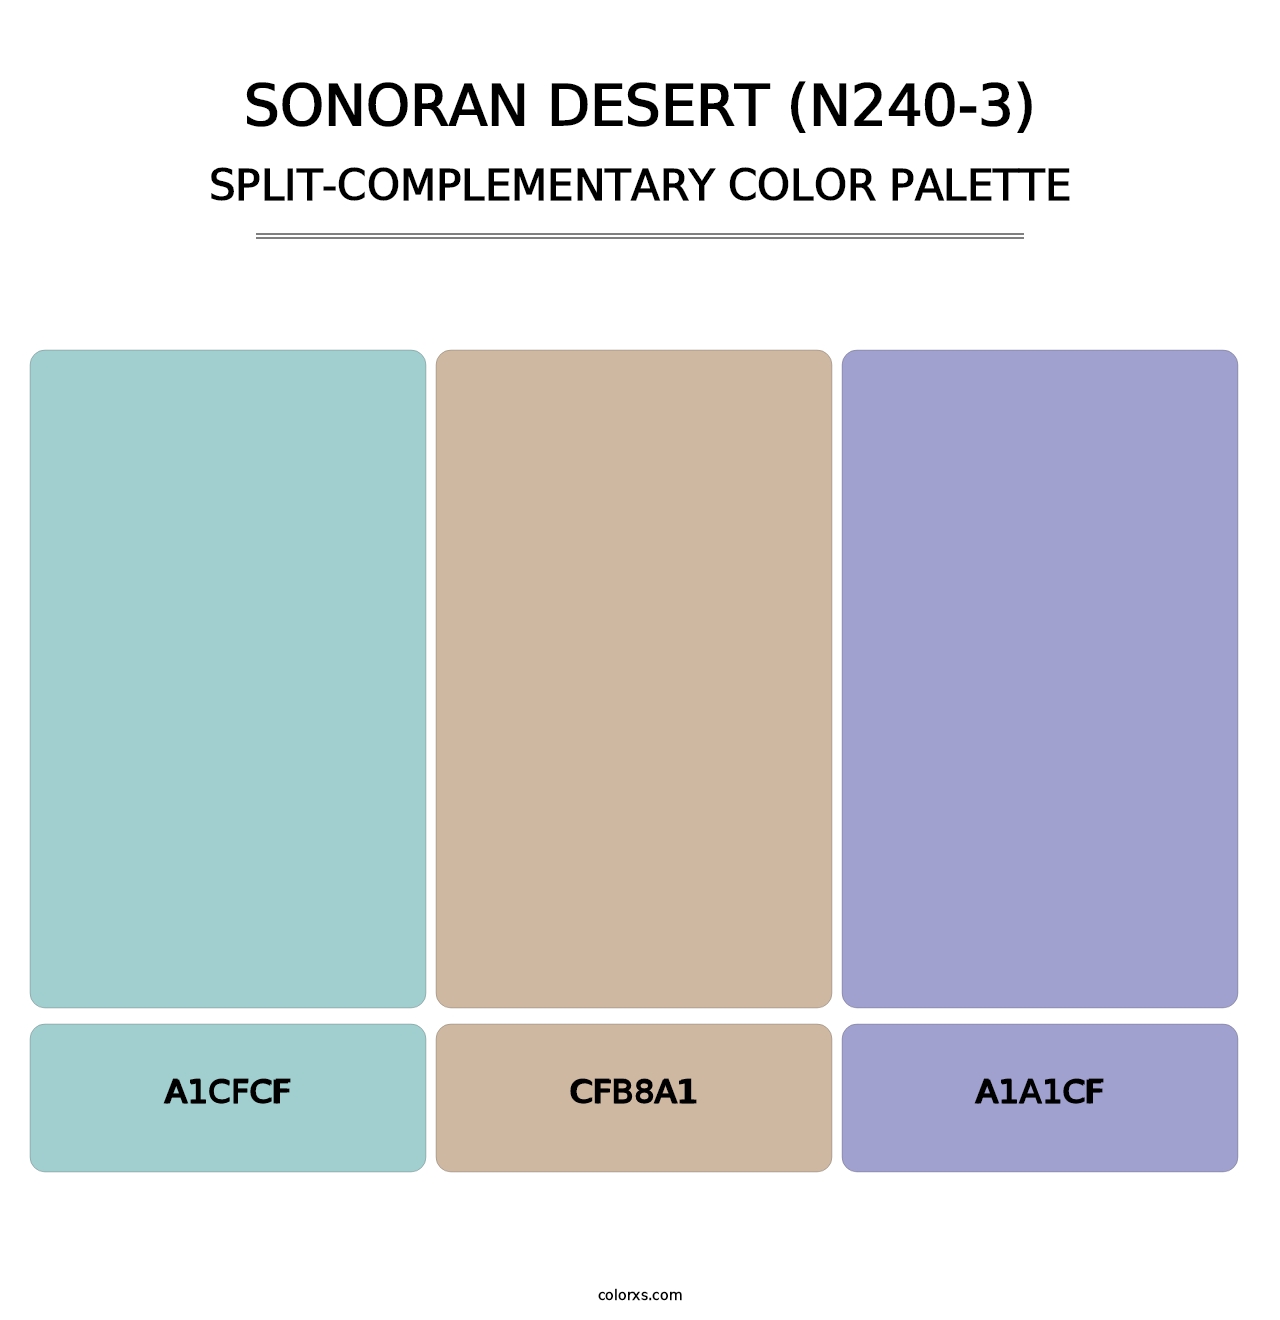 Sonoran Desert (N240-3) - Split-Complementary Color Palette